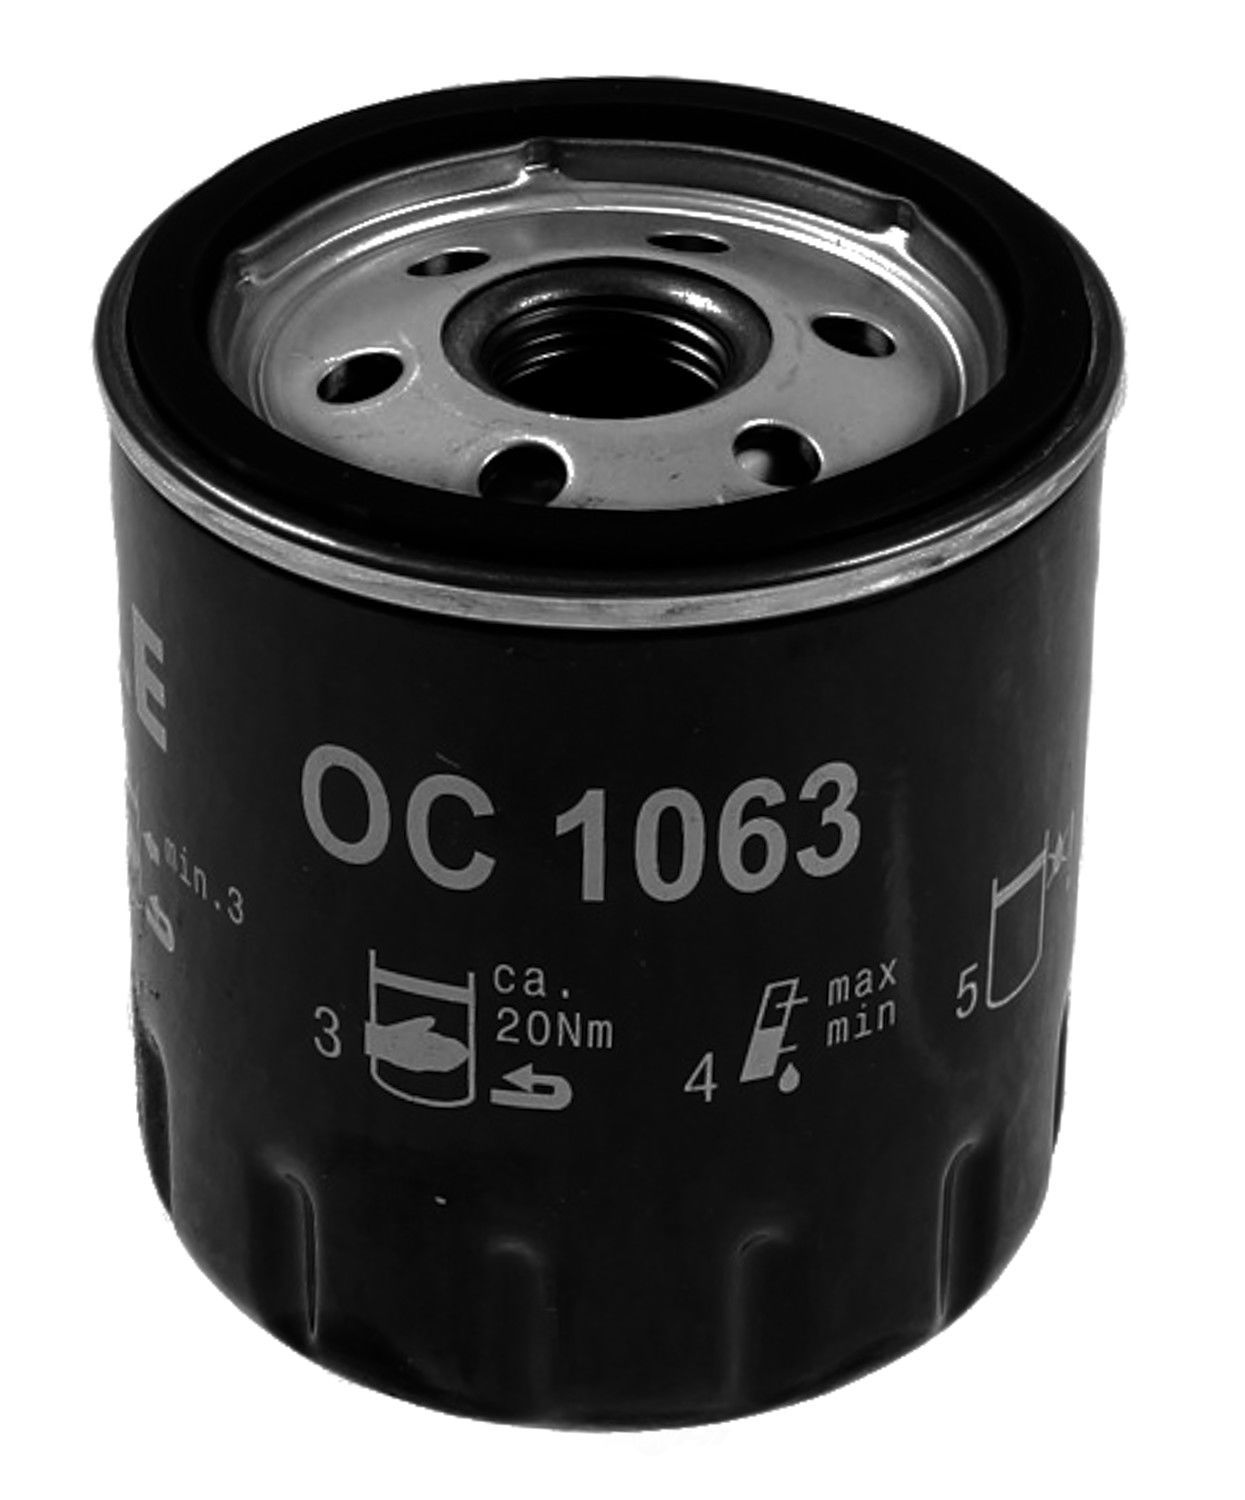 MAHLE ORIGINAL - Engine Oil Filter - MHL OC 1063